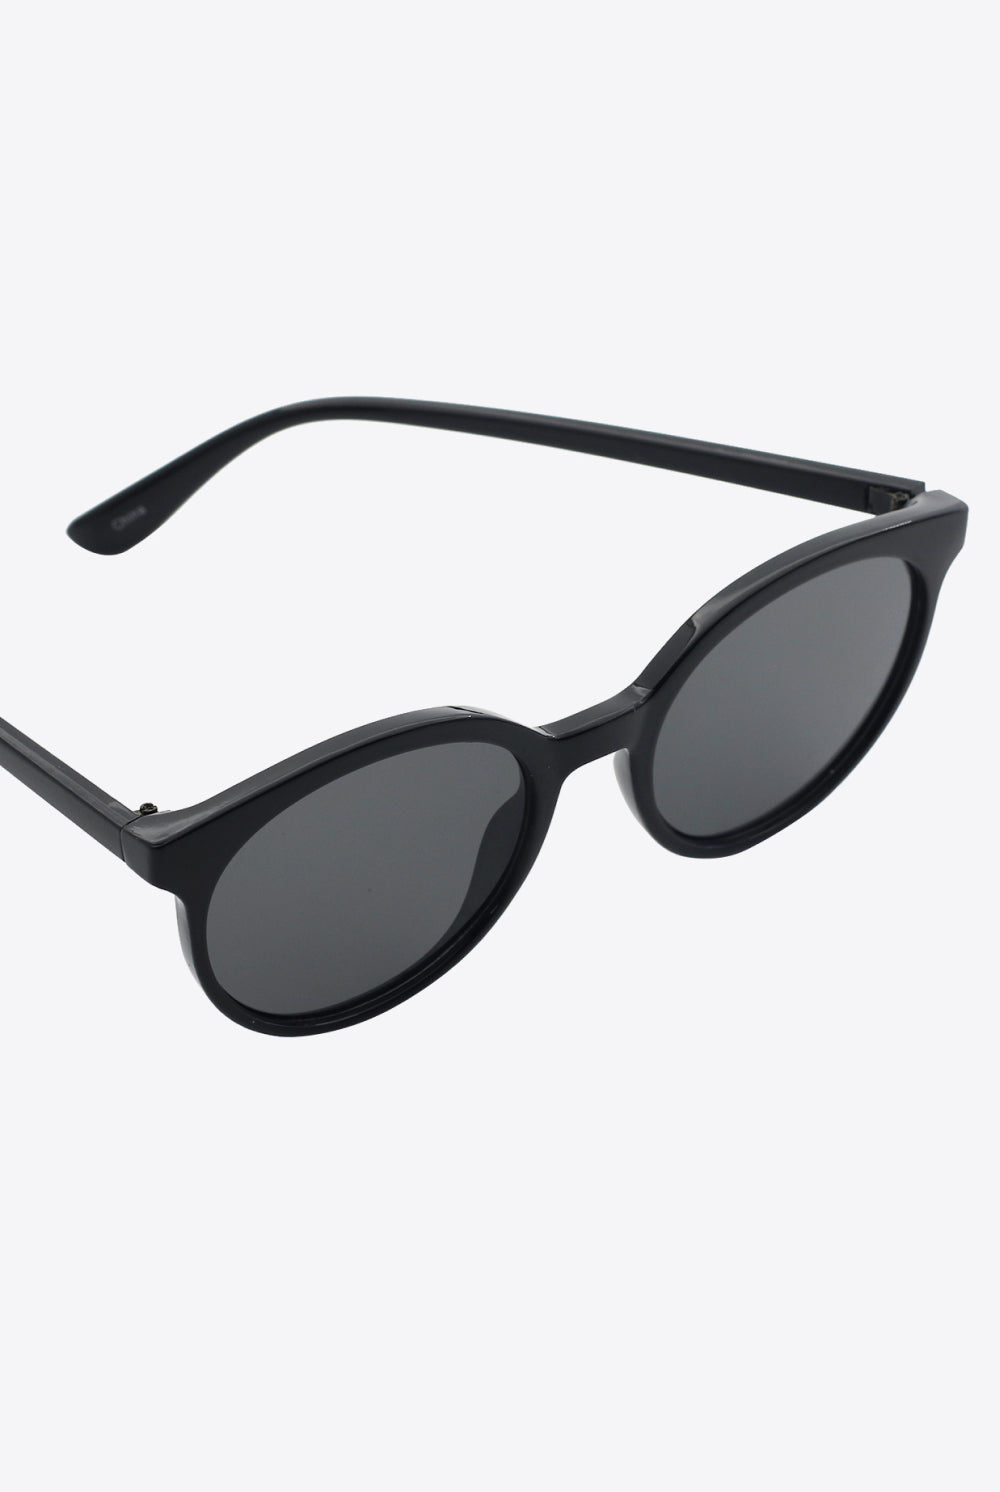 White Smoke Round Full Rim Polycarbonate Frame Sunglasses Accessories